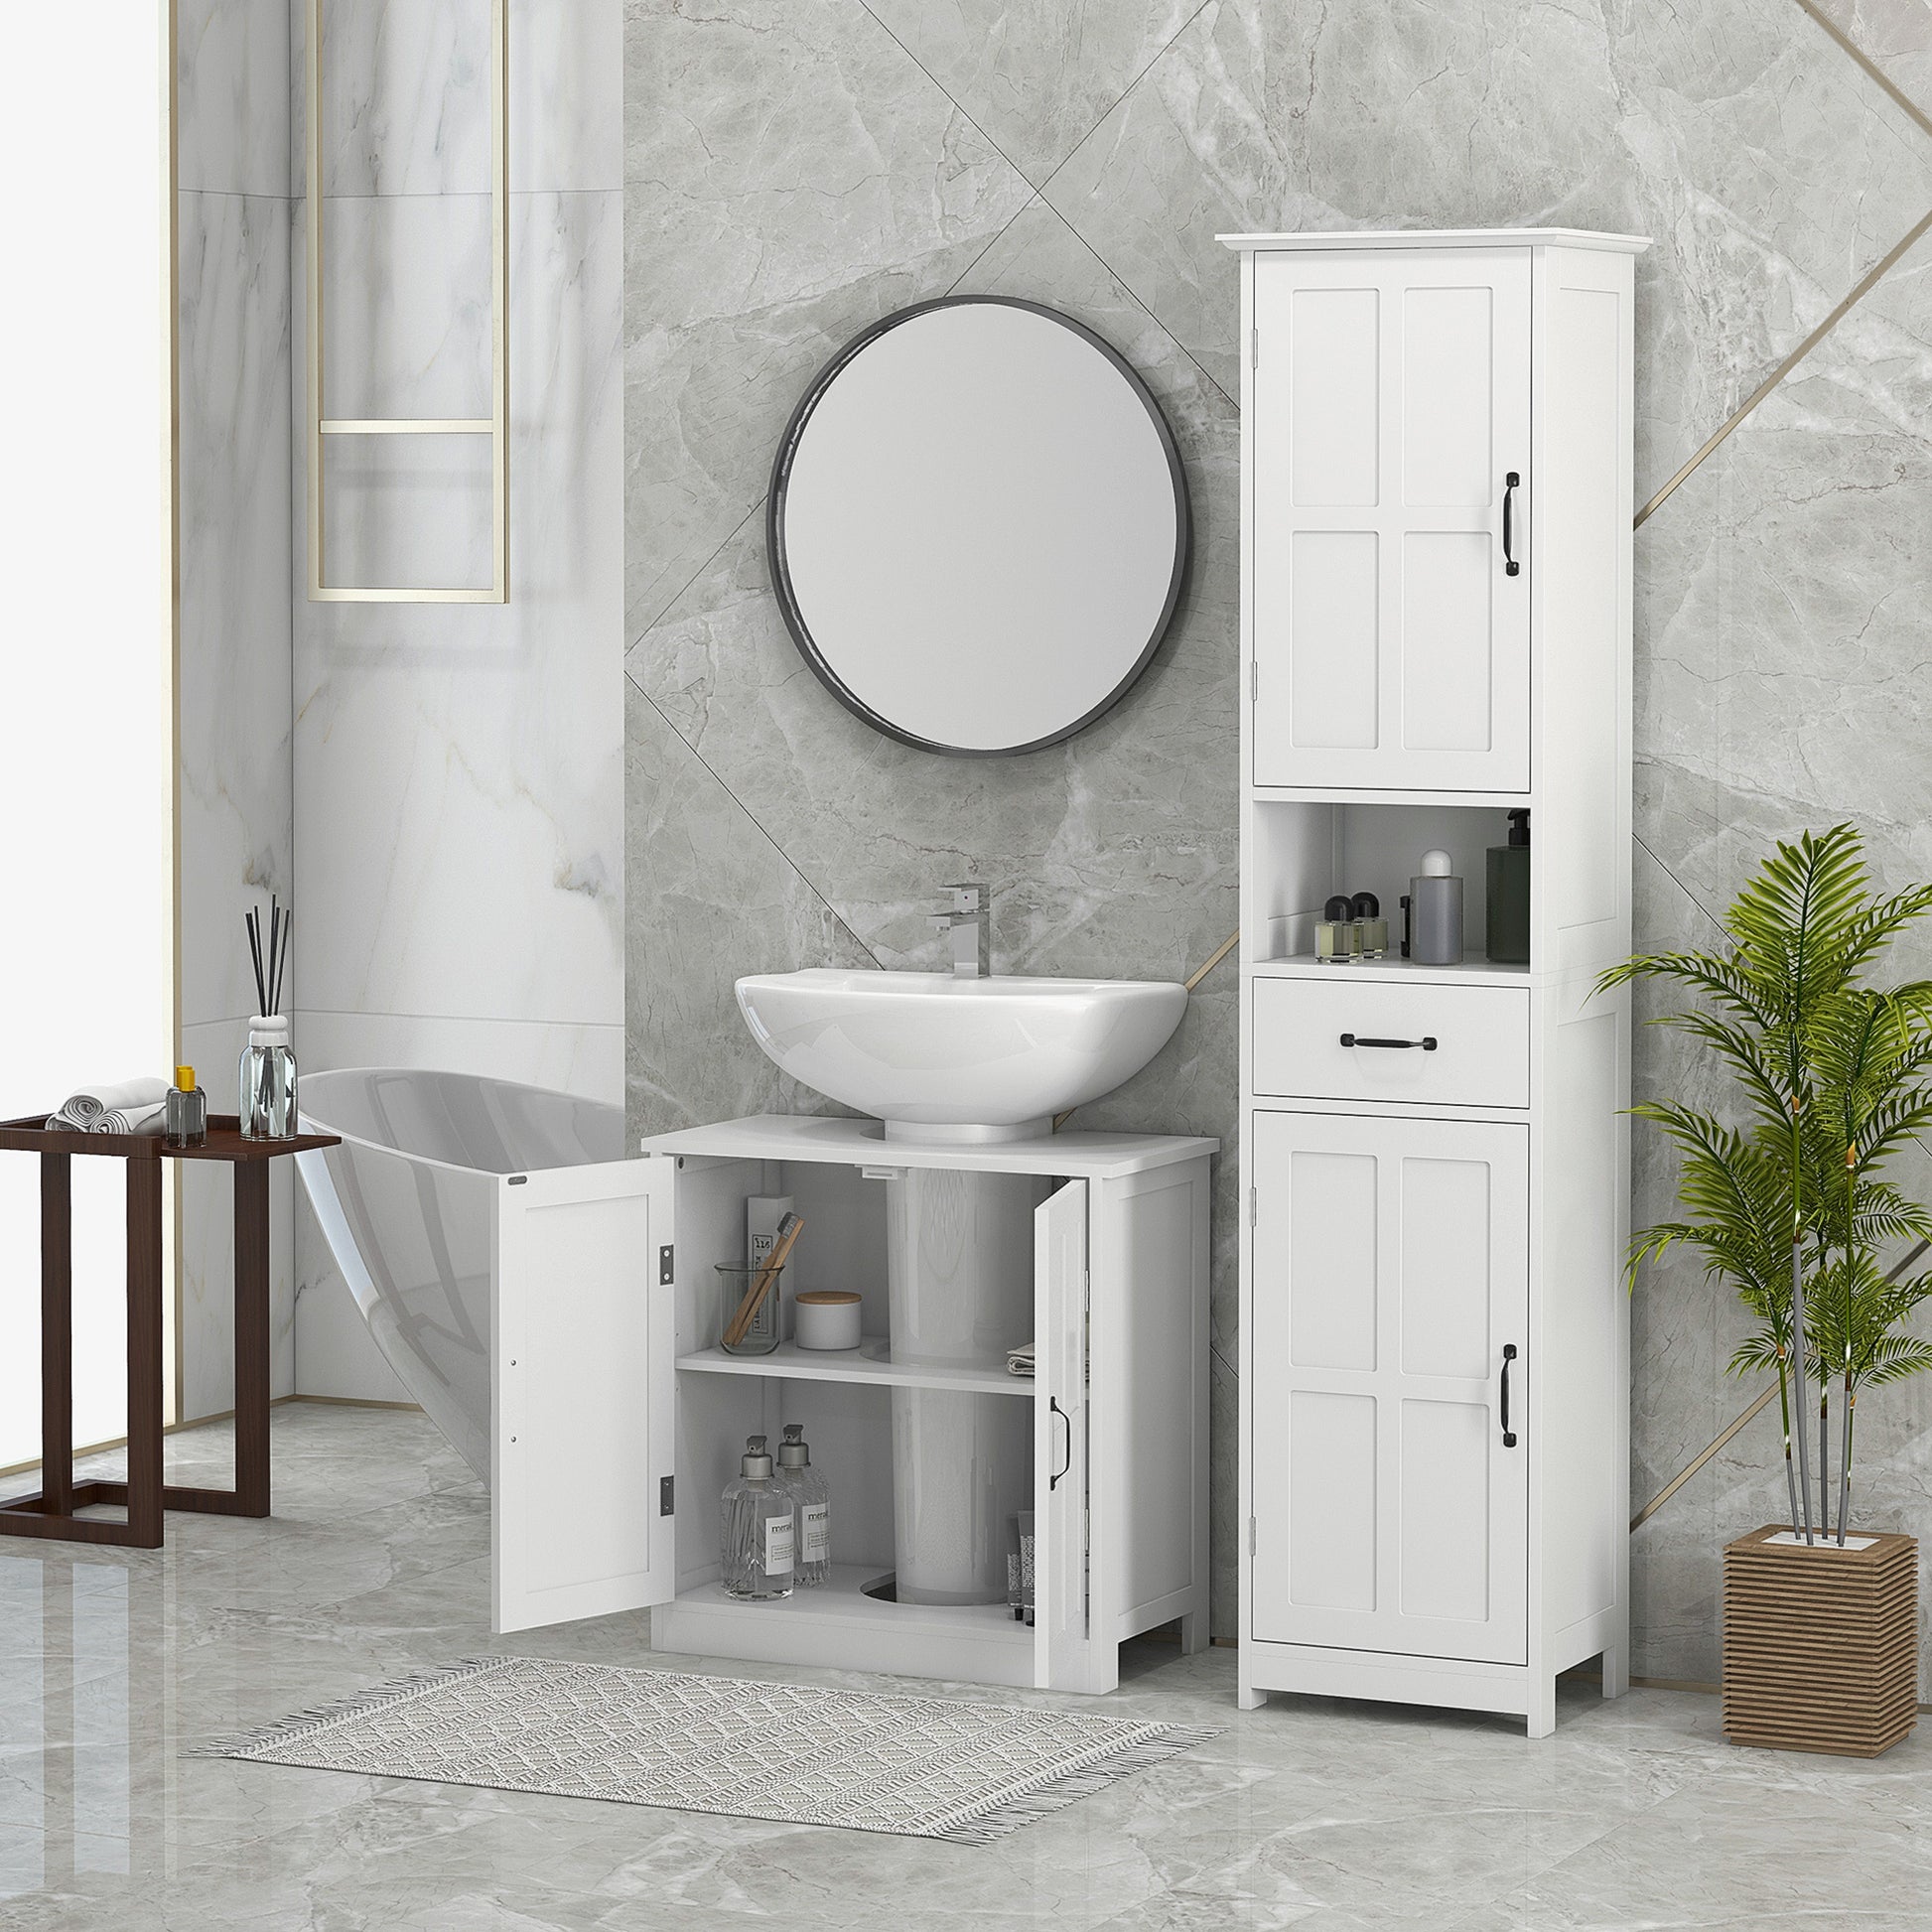 Bathroom Sink Cabinet, Pedestal Sink Cabinet With